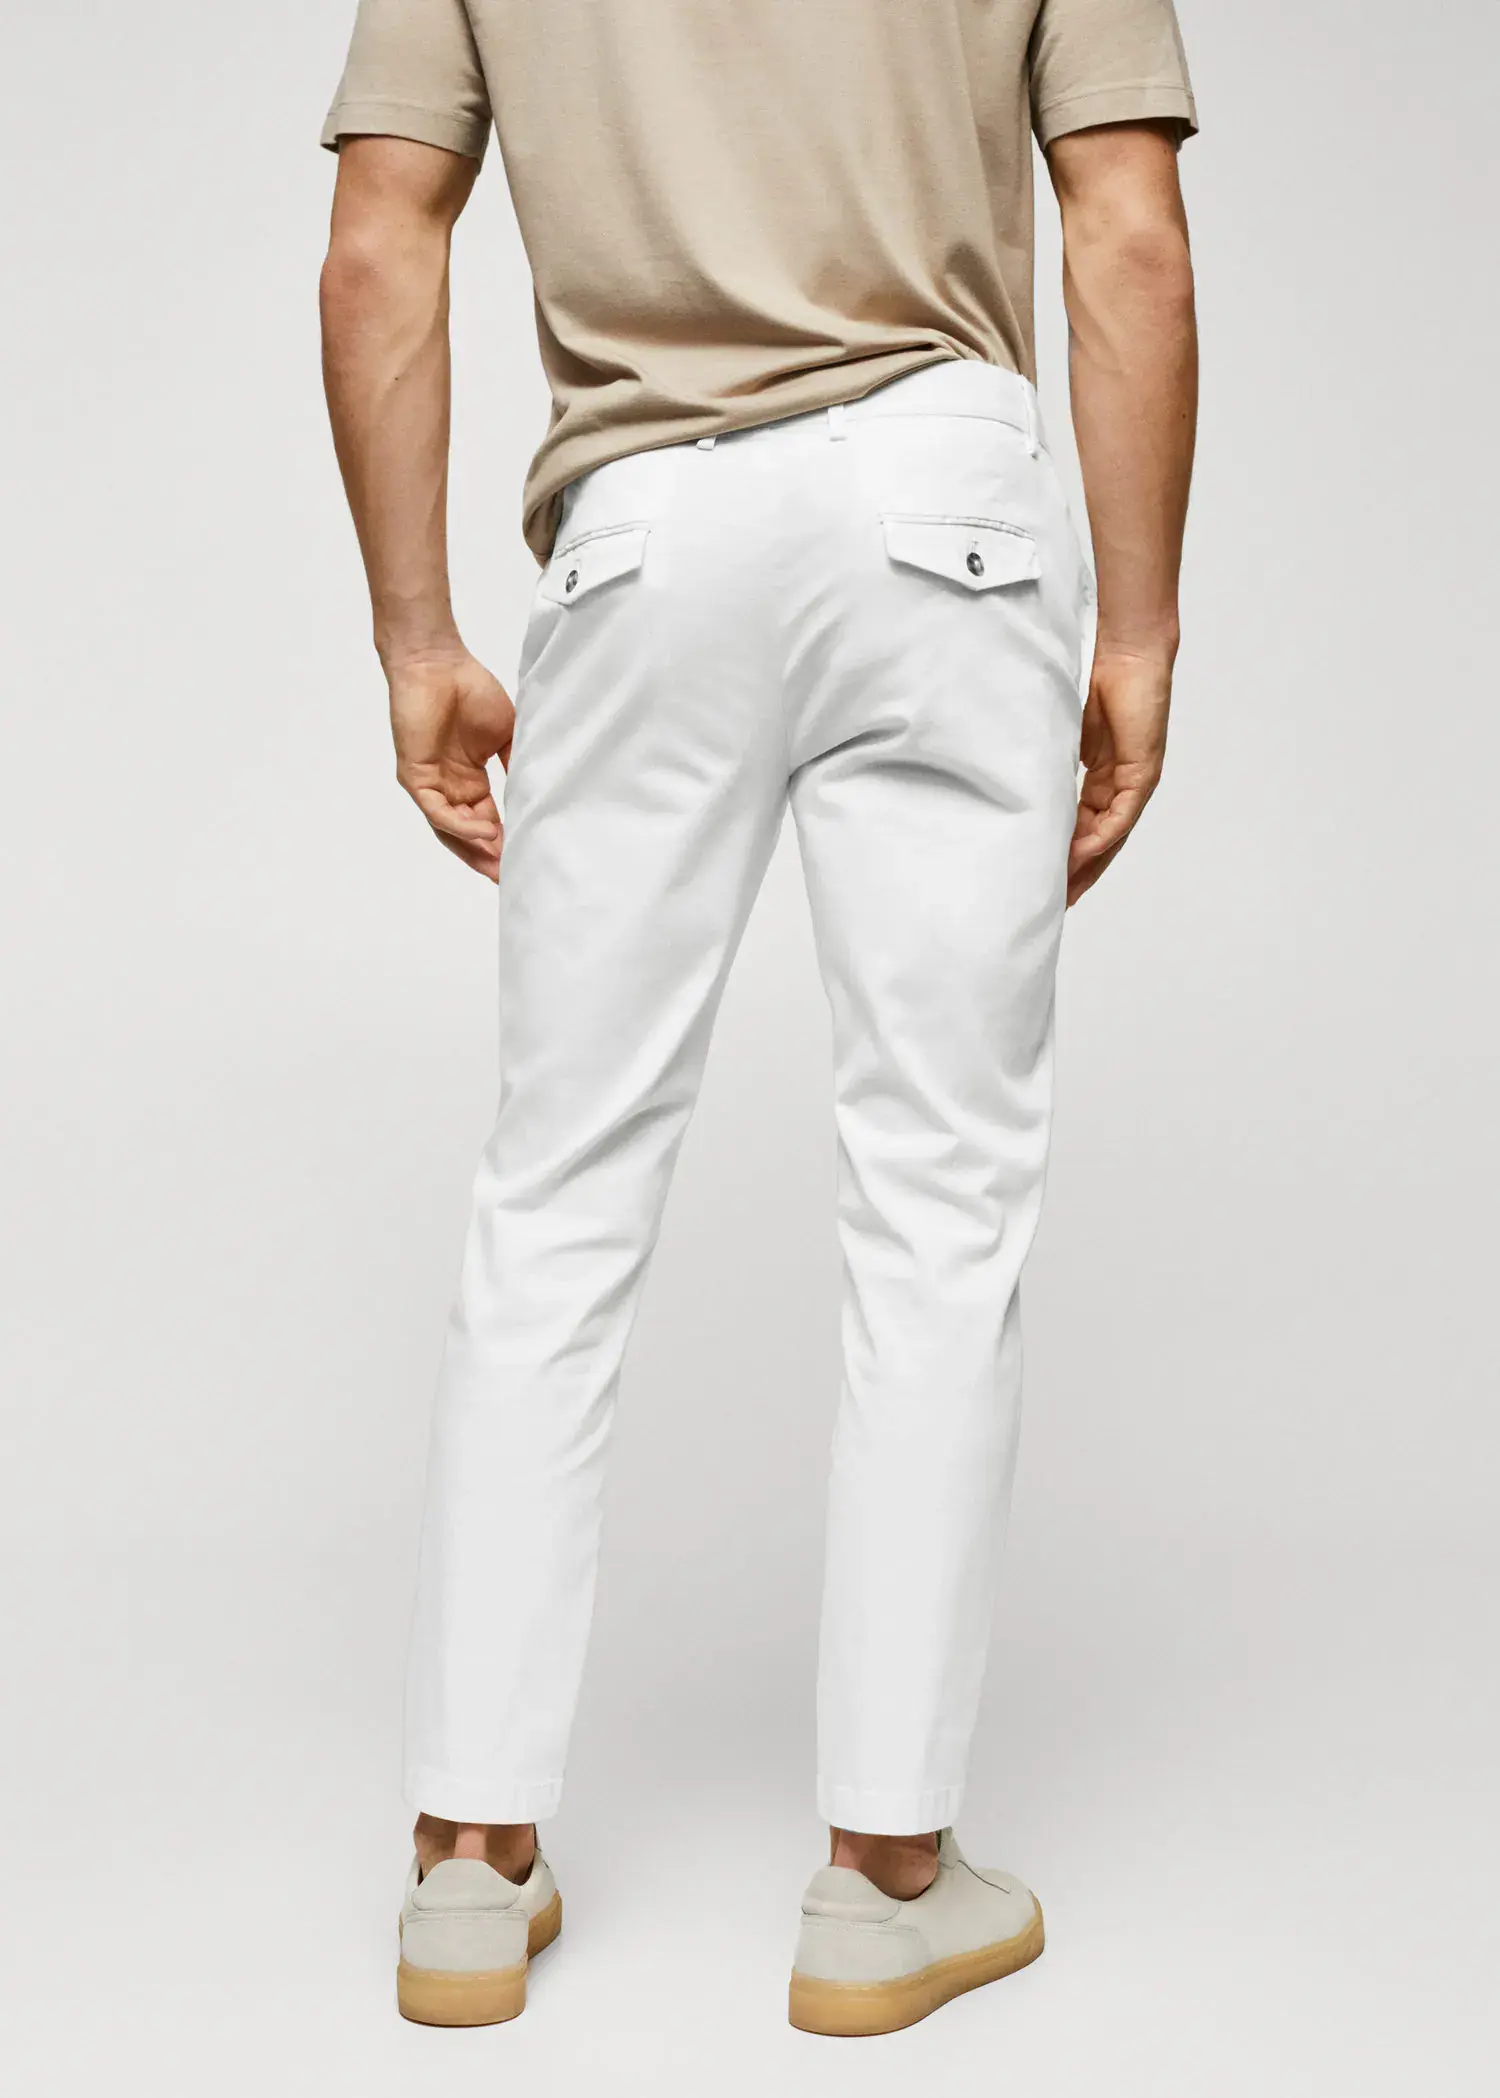 Mango Cotton tapered crop pants. a man wearing white pants and a tan shirt. 